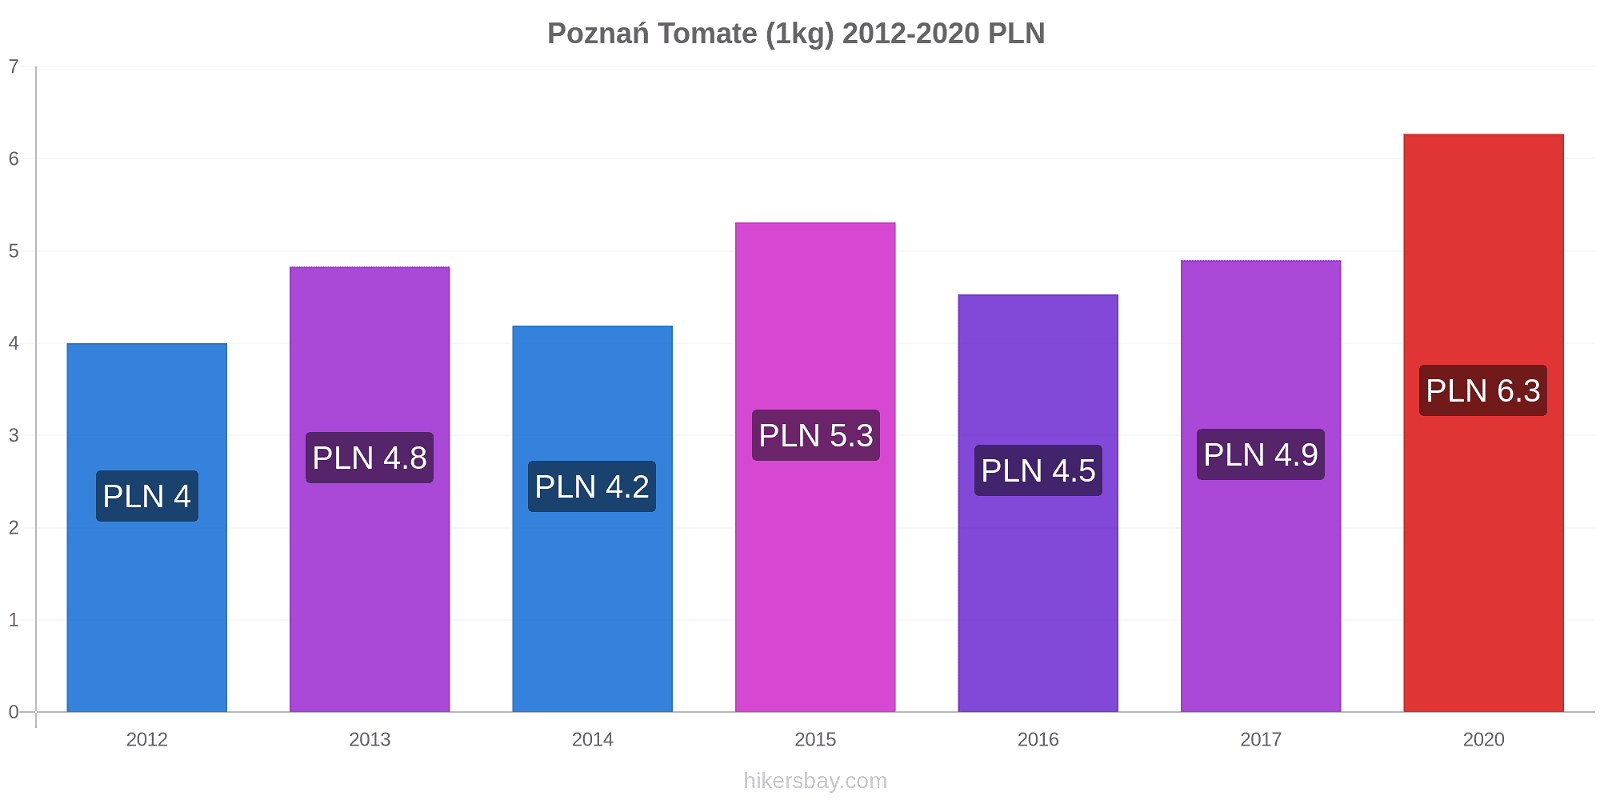 Poznań changements de prix Tomate (1kg) hikersbay.com